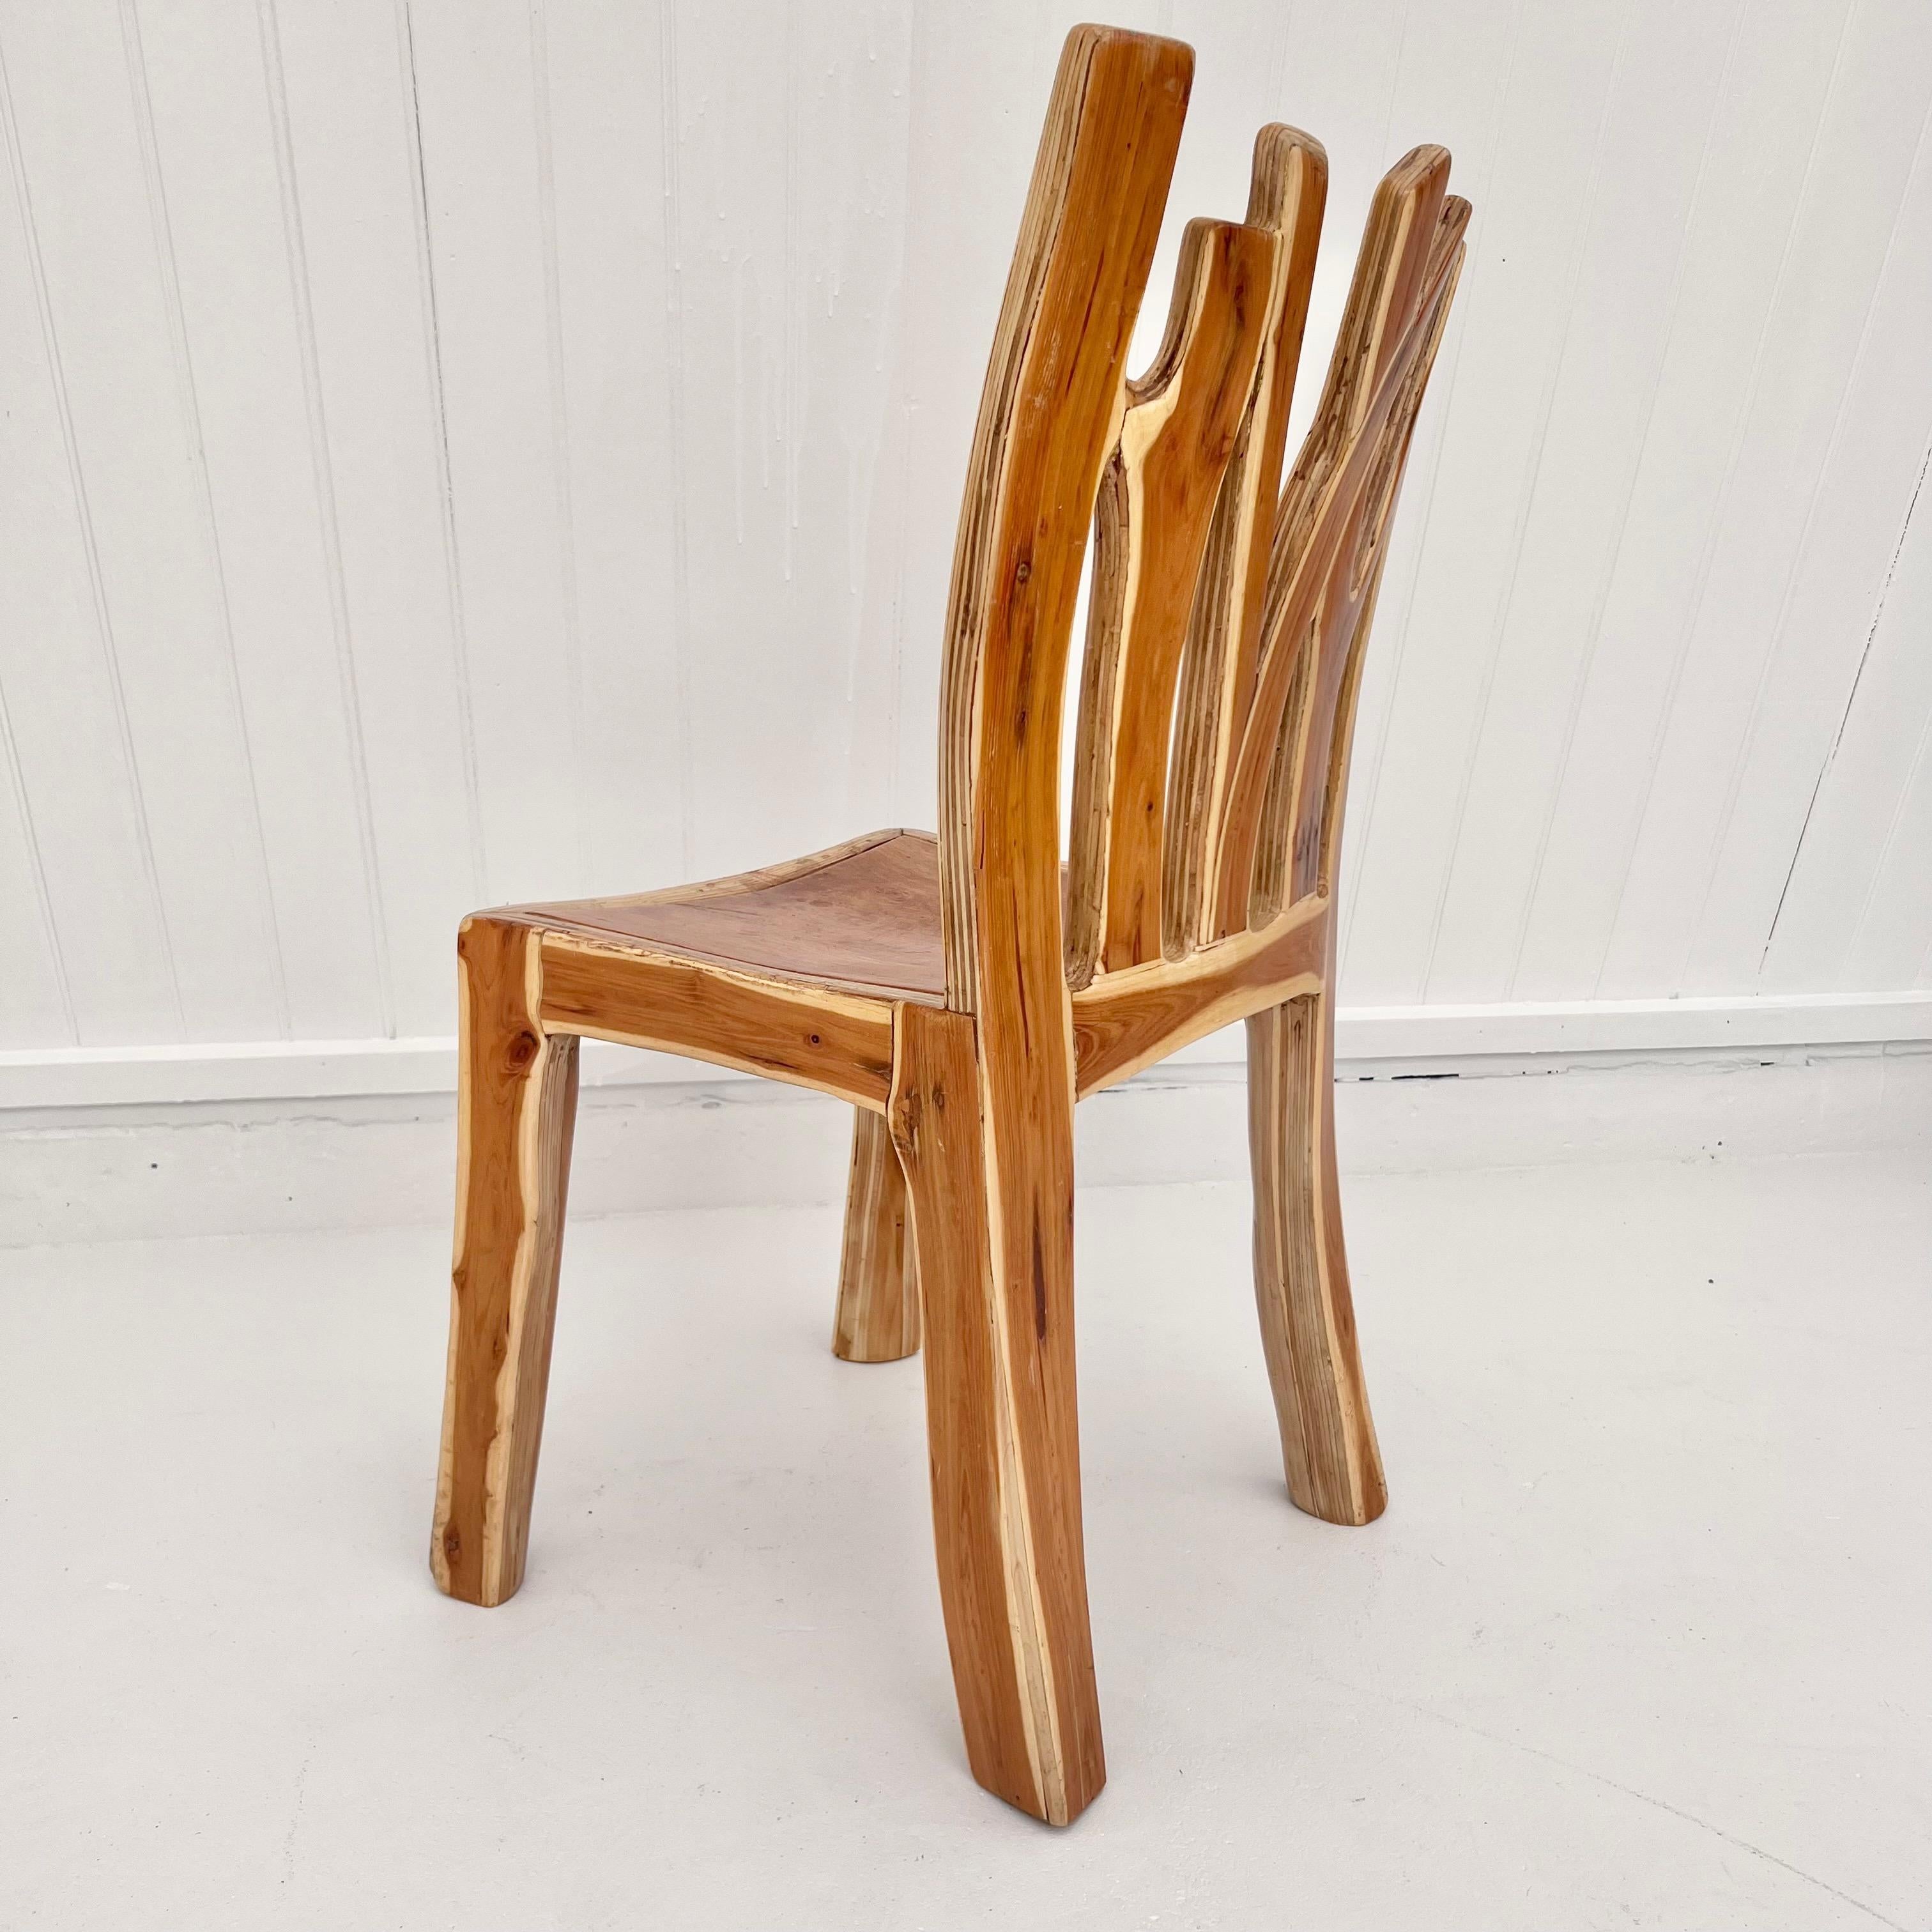 Late 20th Century Hand Carved Folk Art Chair, 1980s USA